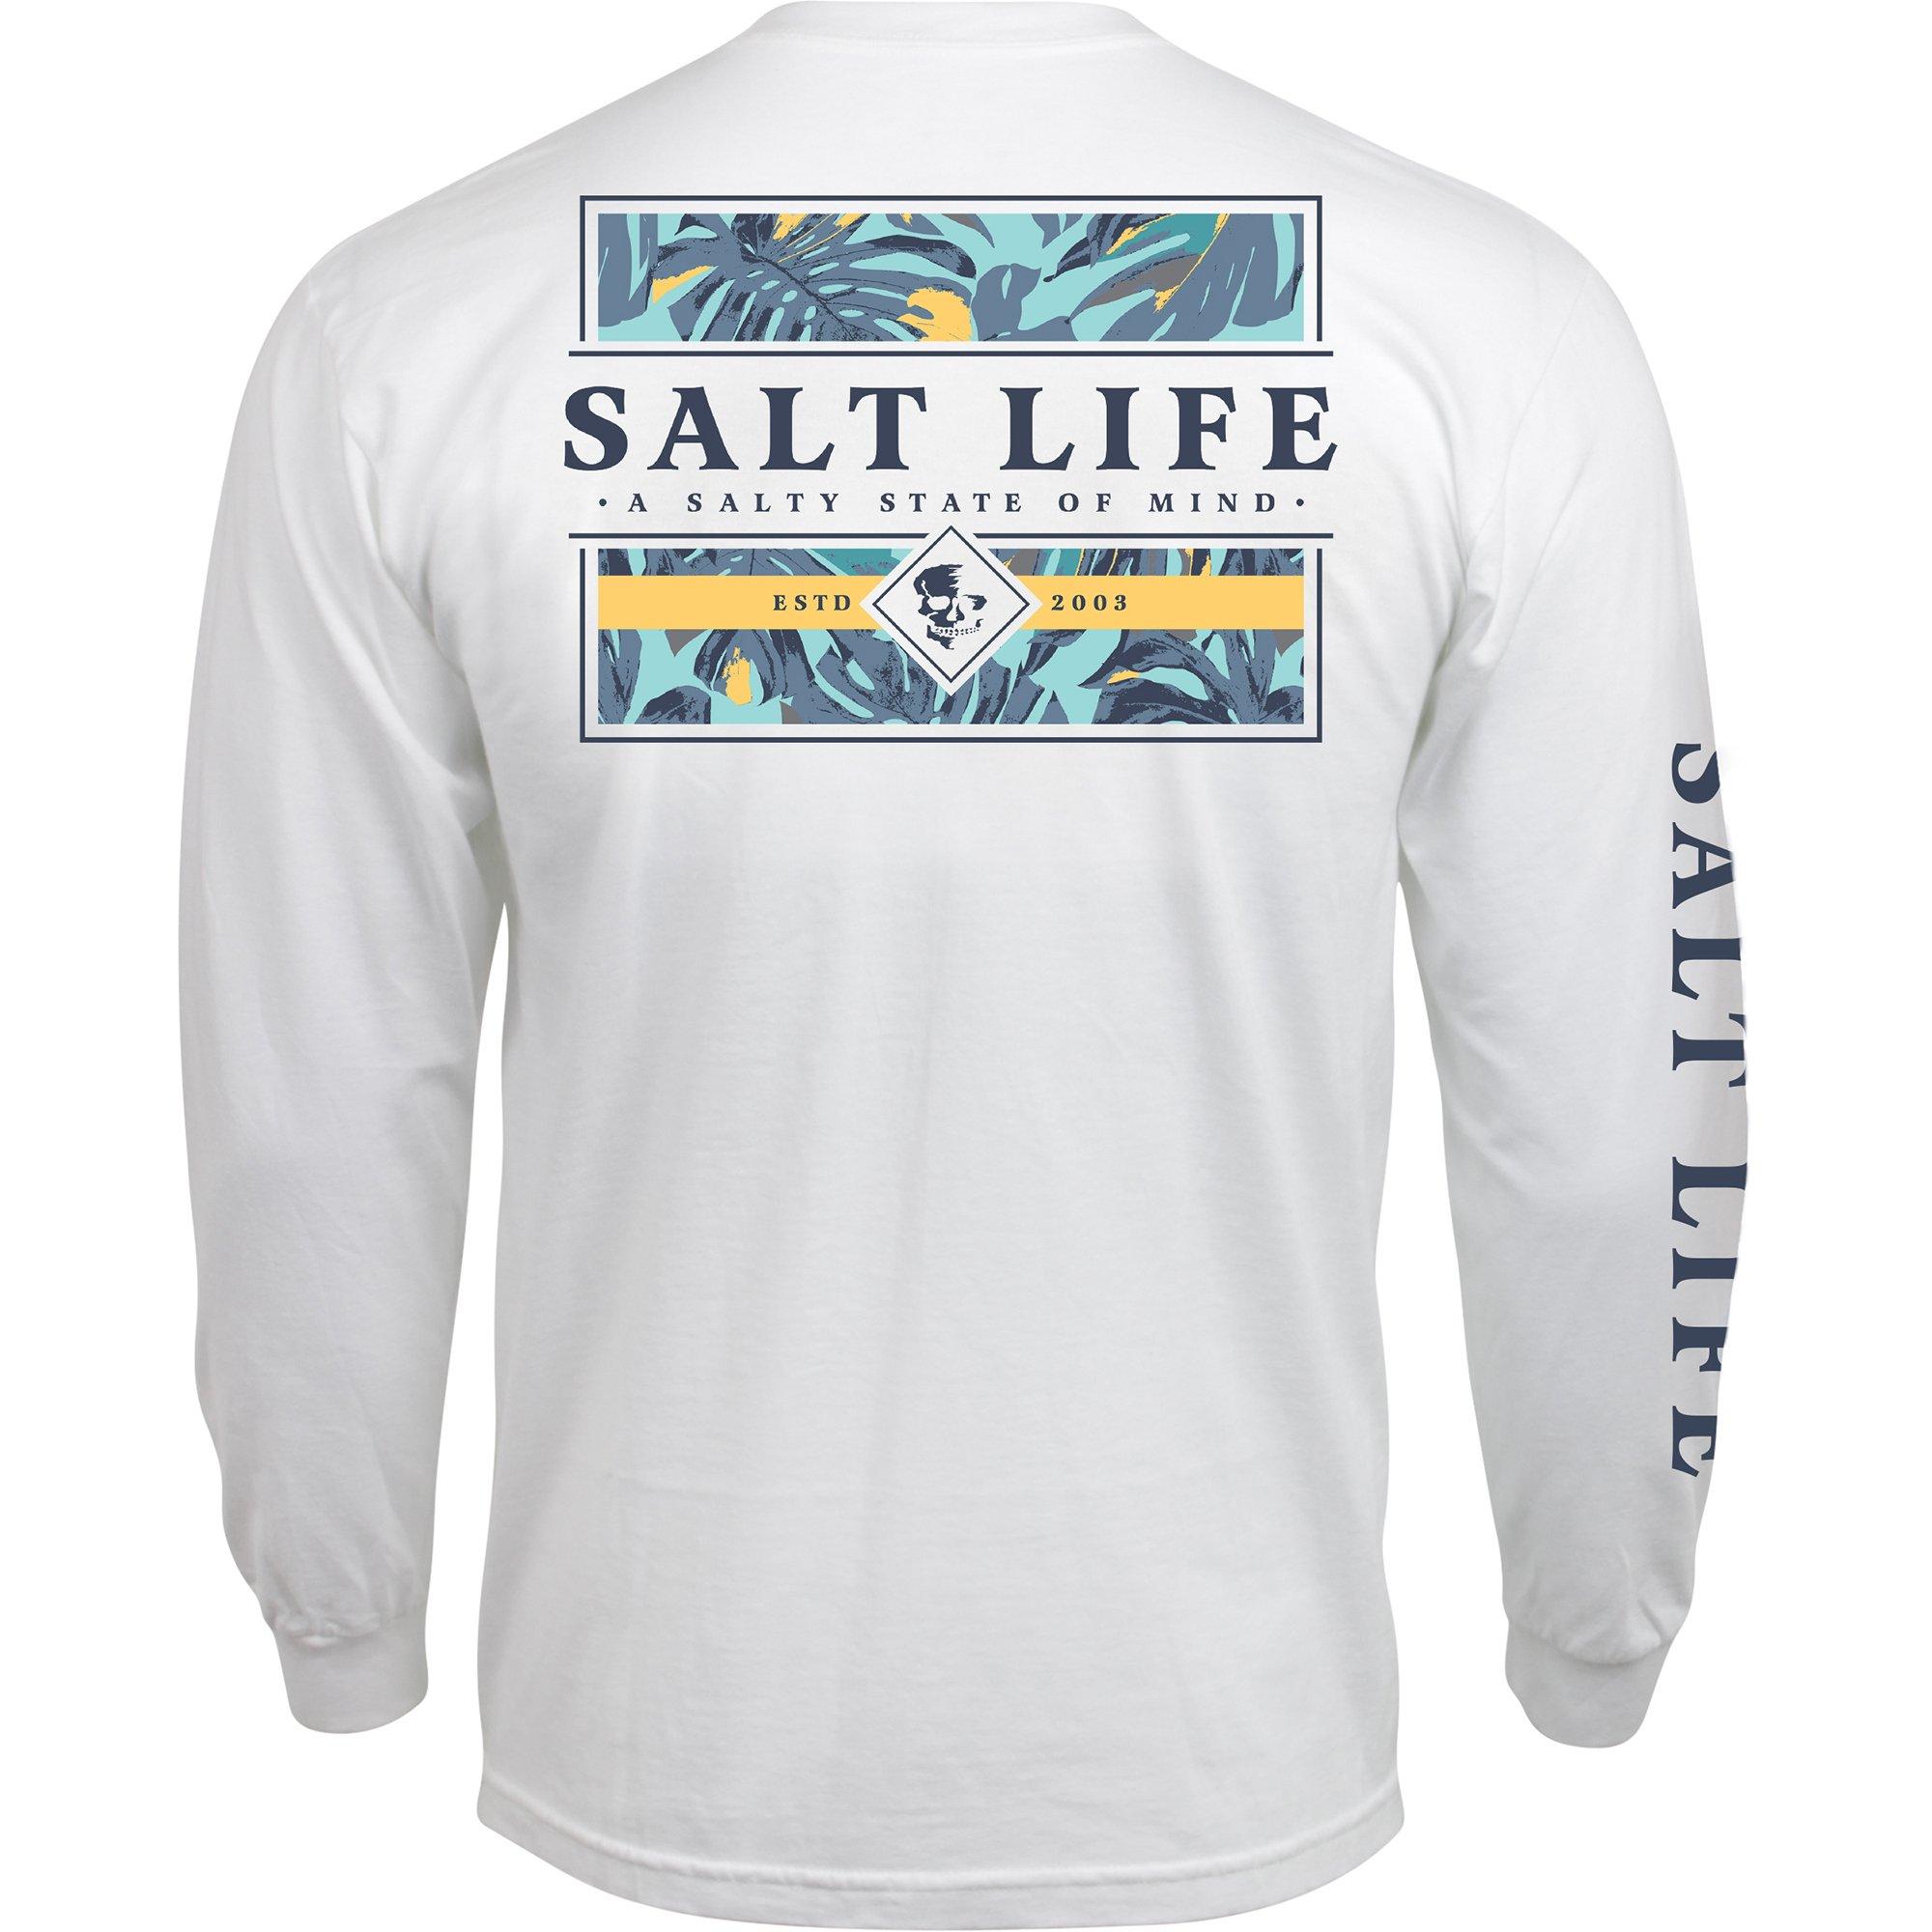 Salt Life Men's Marlin Sinker Long Sleeve Shirt, Large, Sky Blue